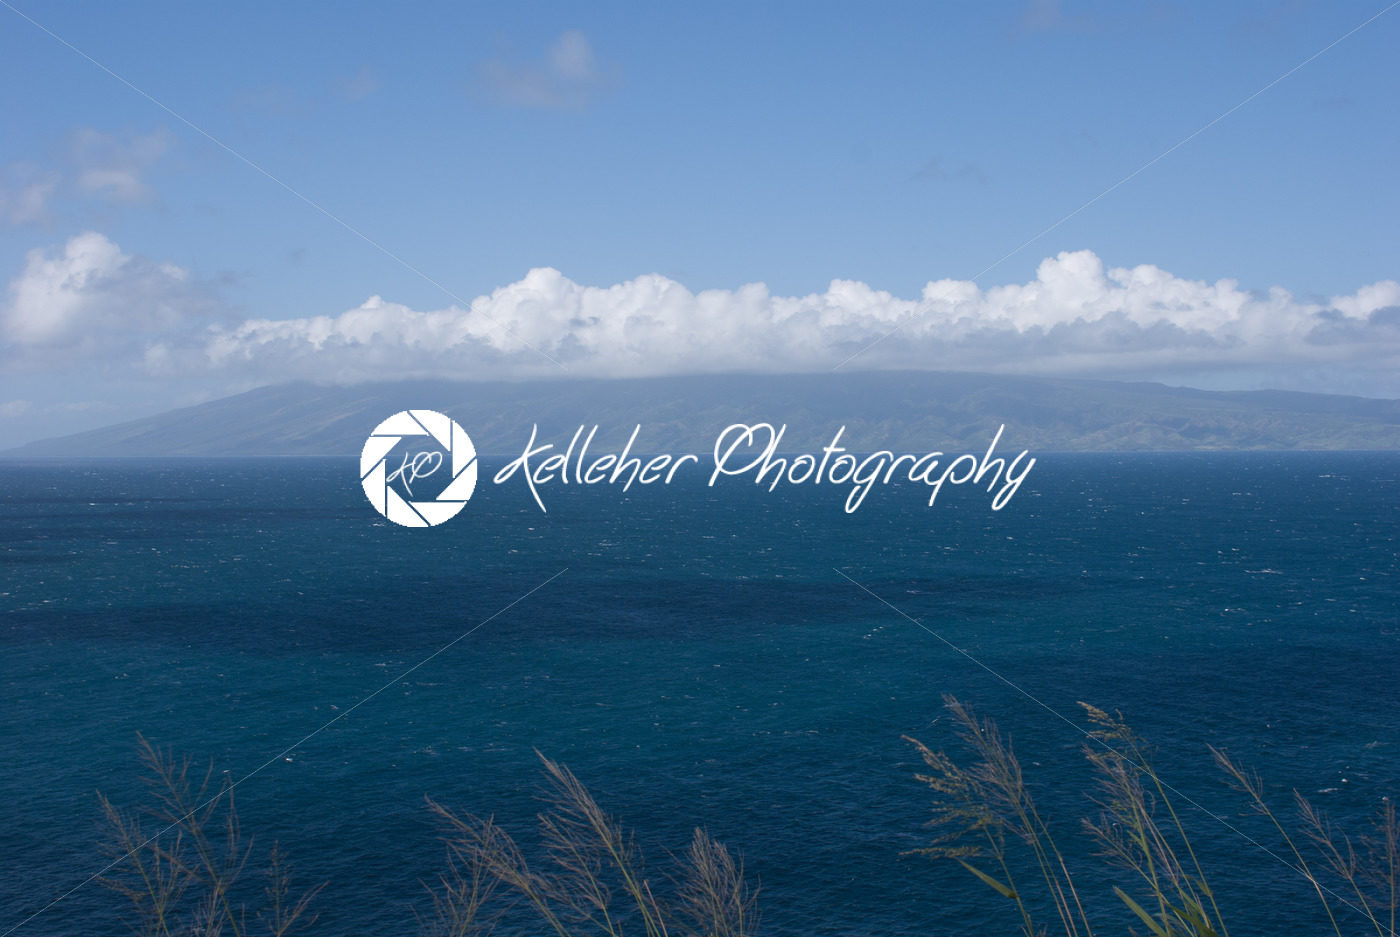 Beautiful views of Maui North coast, taken from famous winding Road to Hana. Maui, Hawaii - Kelleher Photography Store